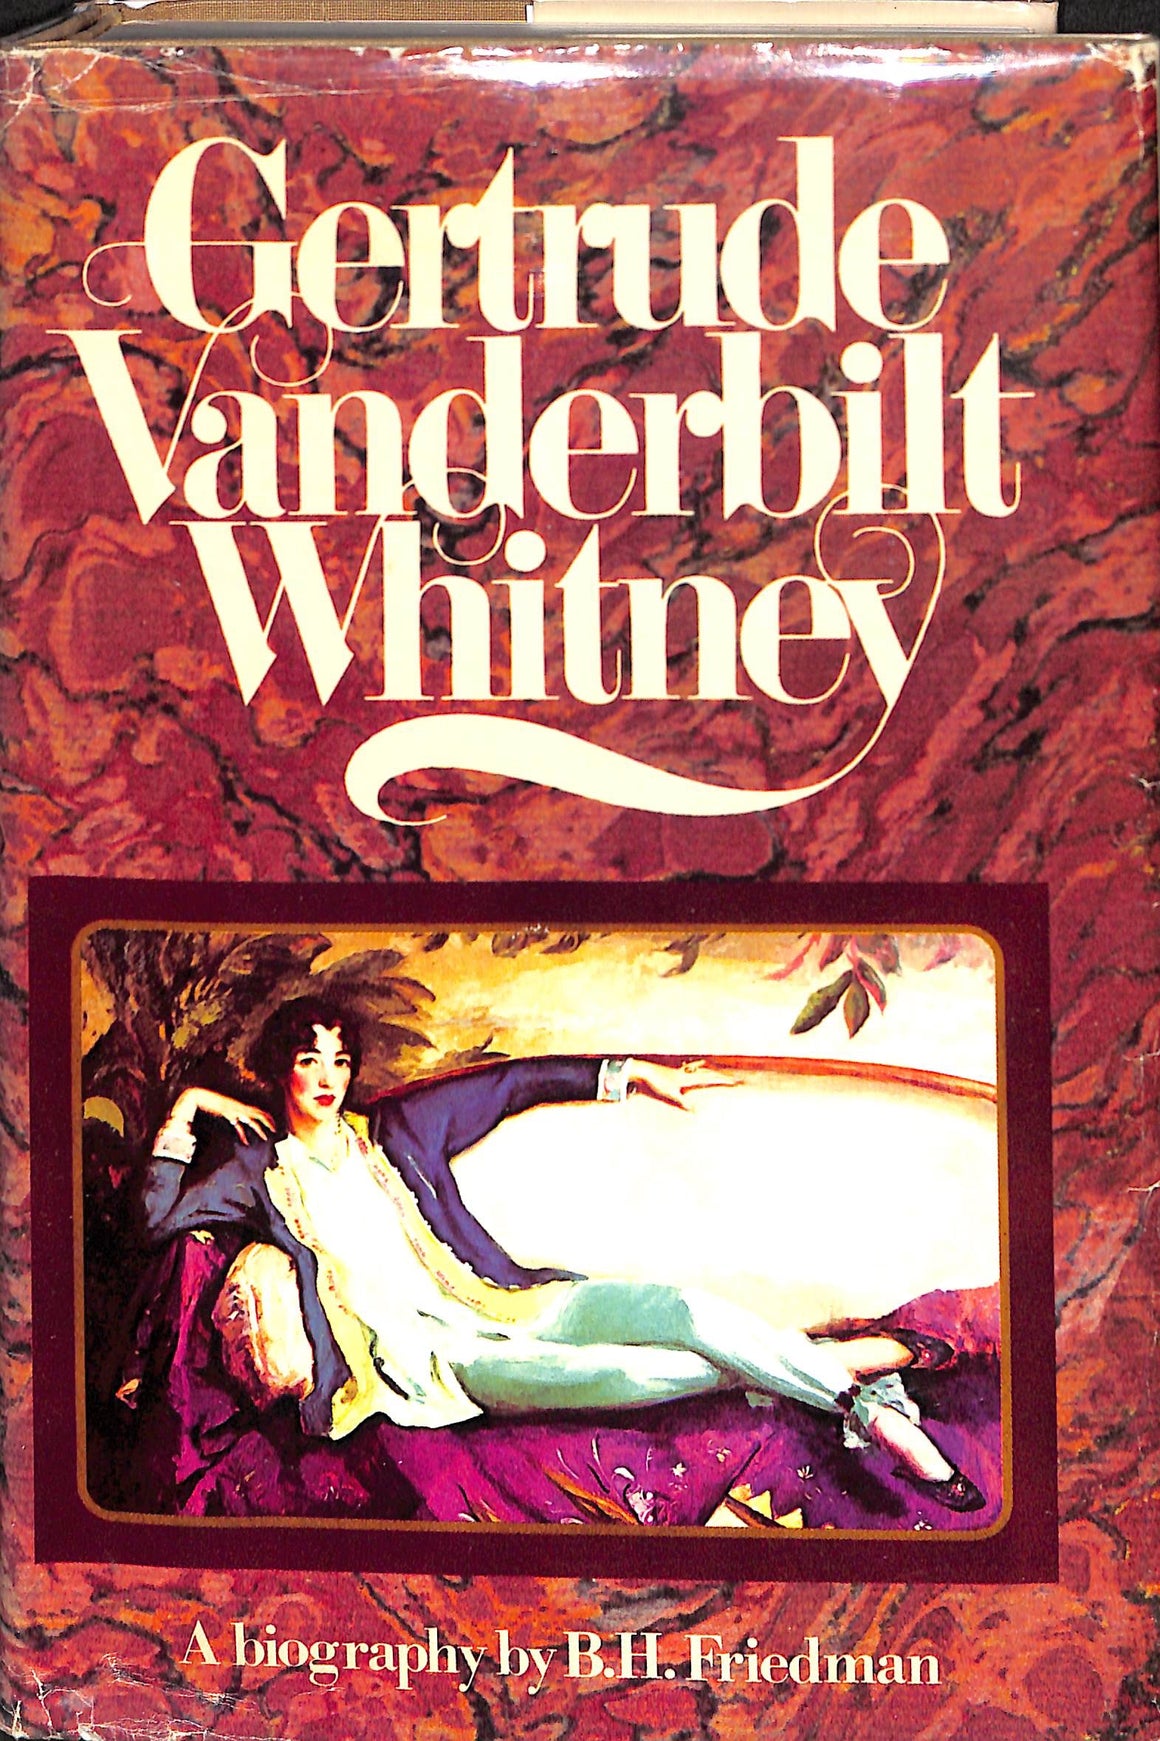 Gertrude Vanderbilt Whitney by B.H. Friedman